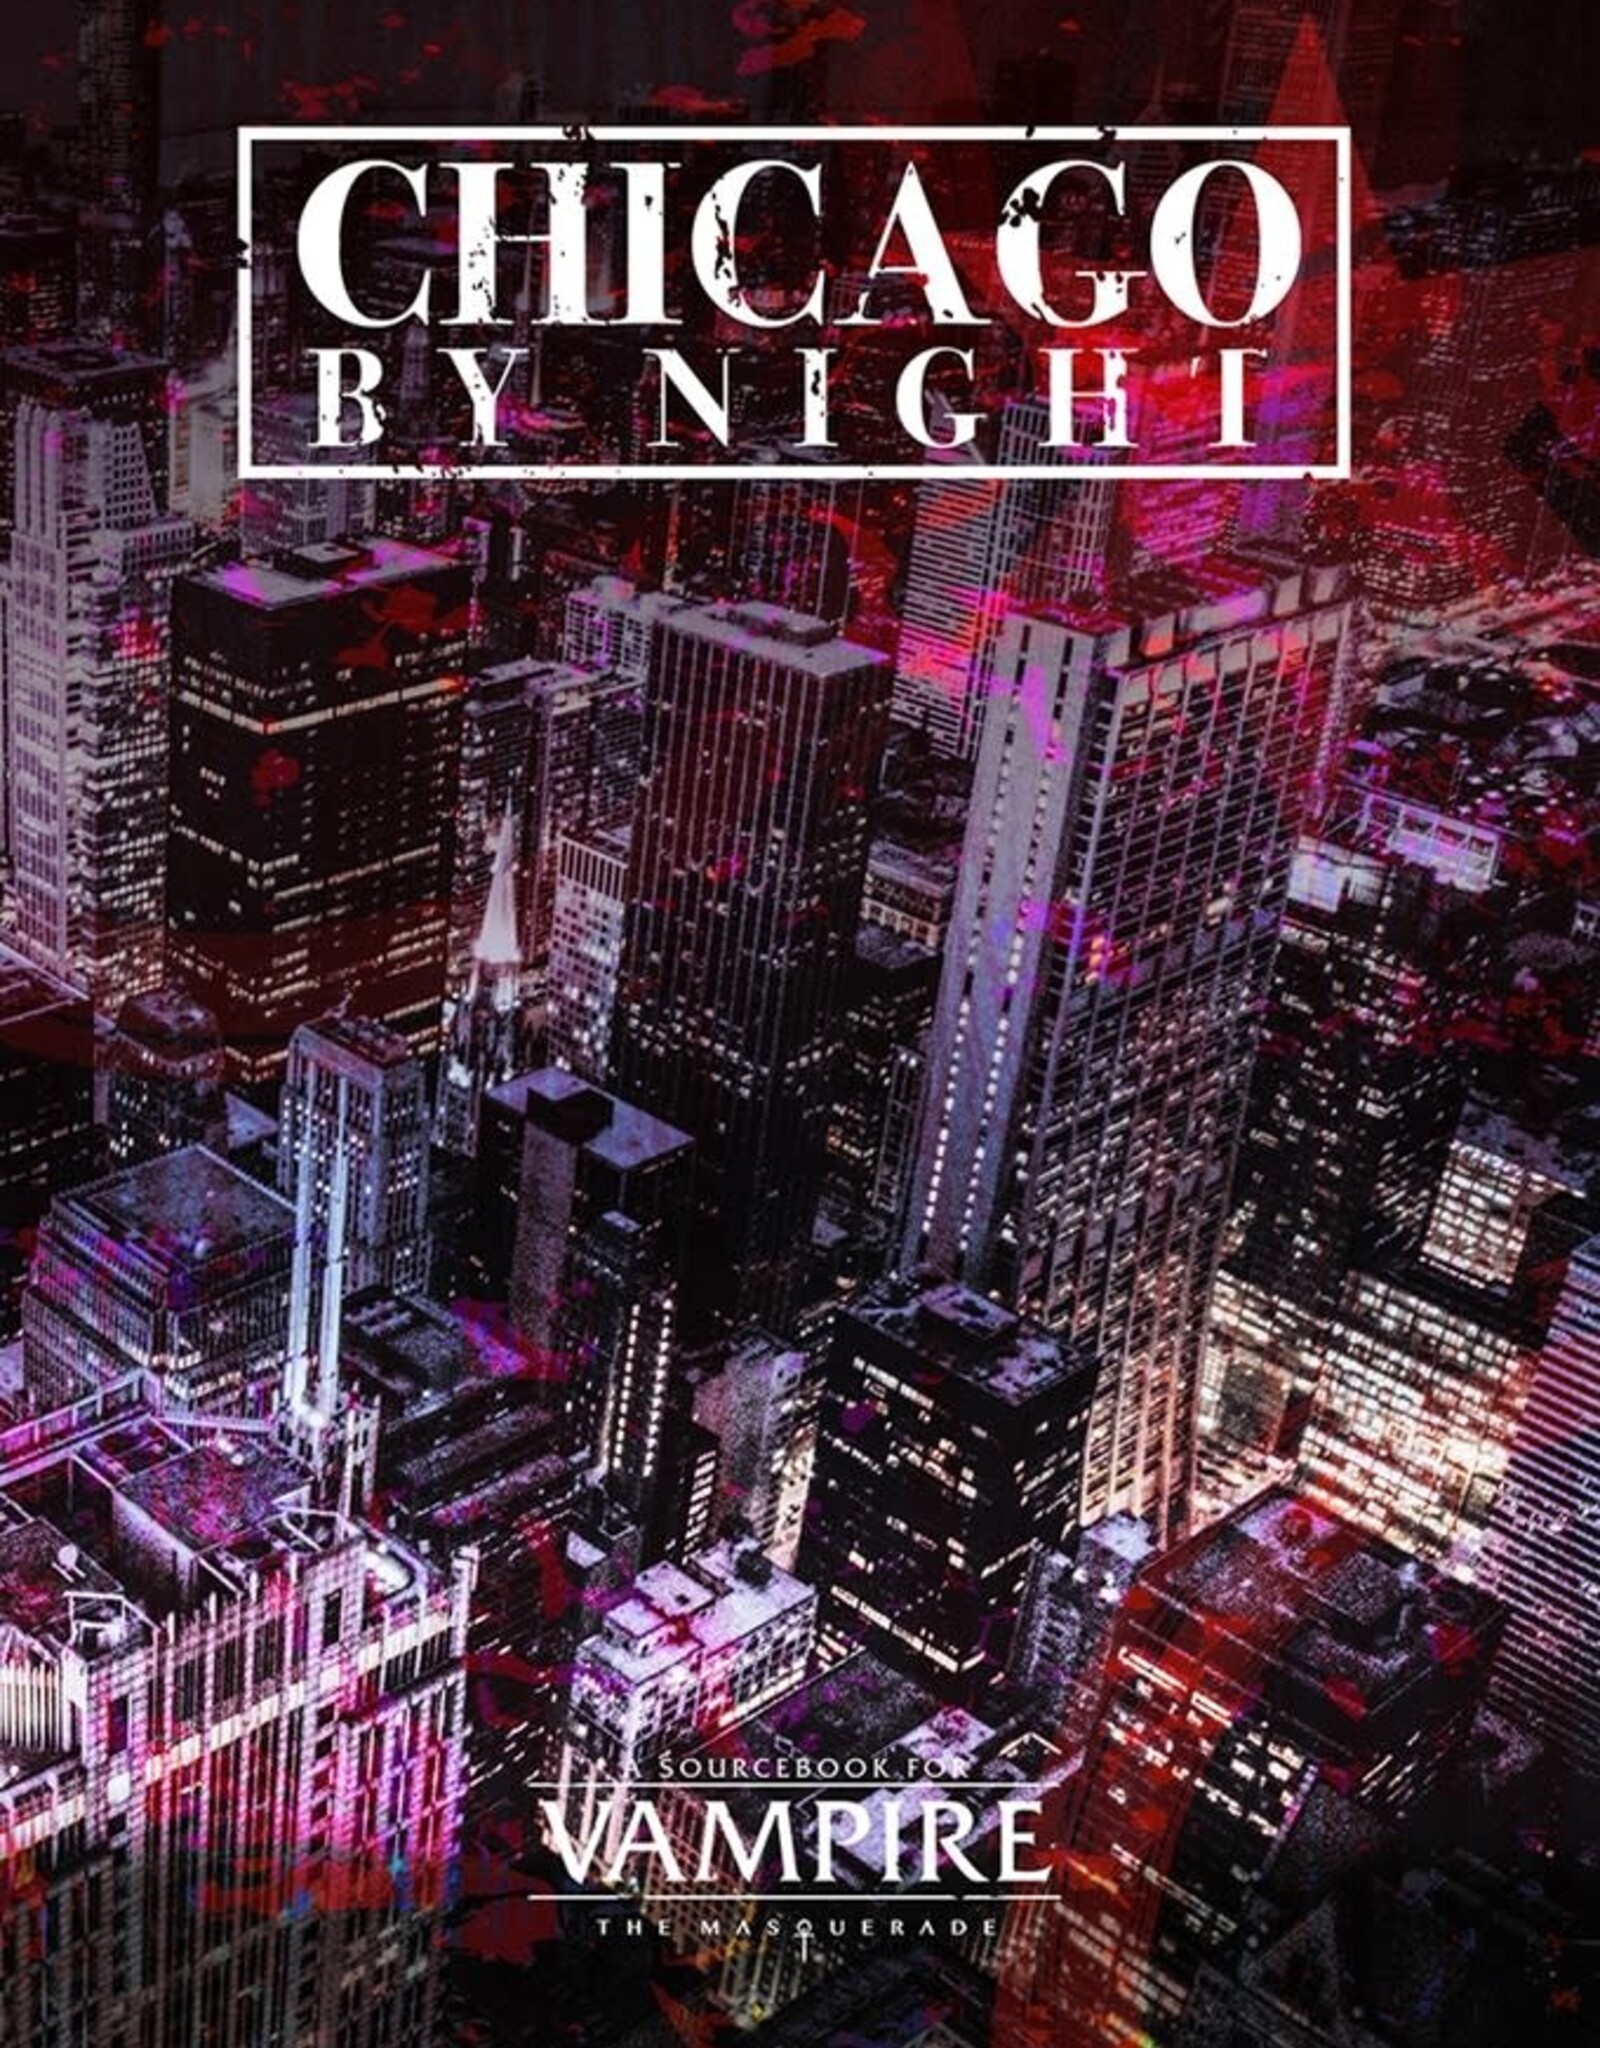 Modiphius Entertainment Vampire: The Masquerade 5E - Chicago by Night